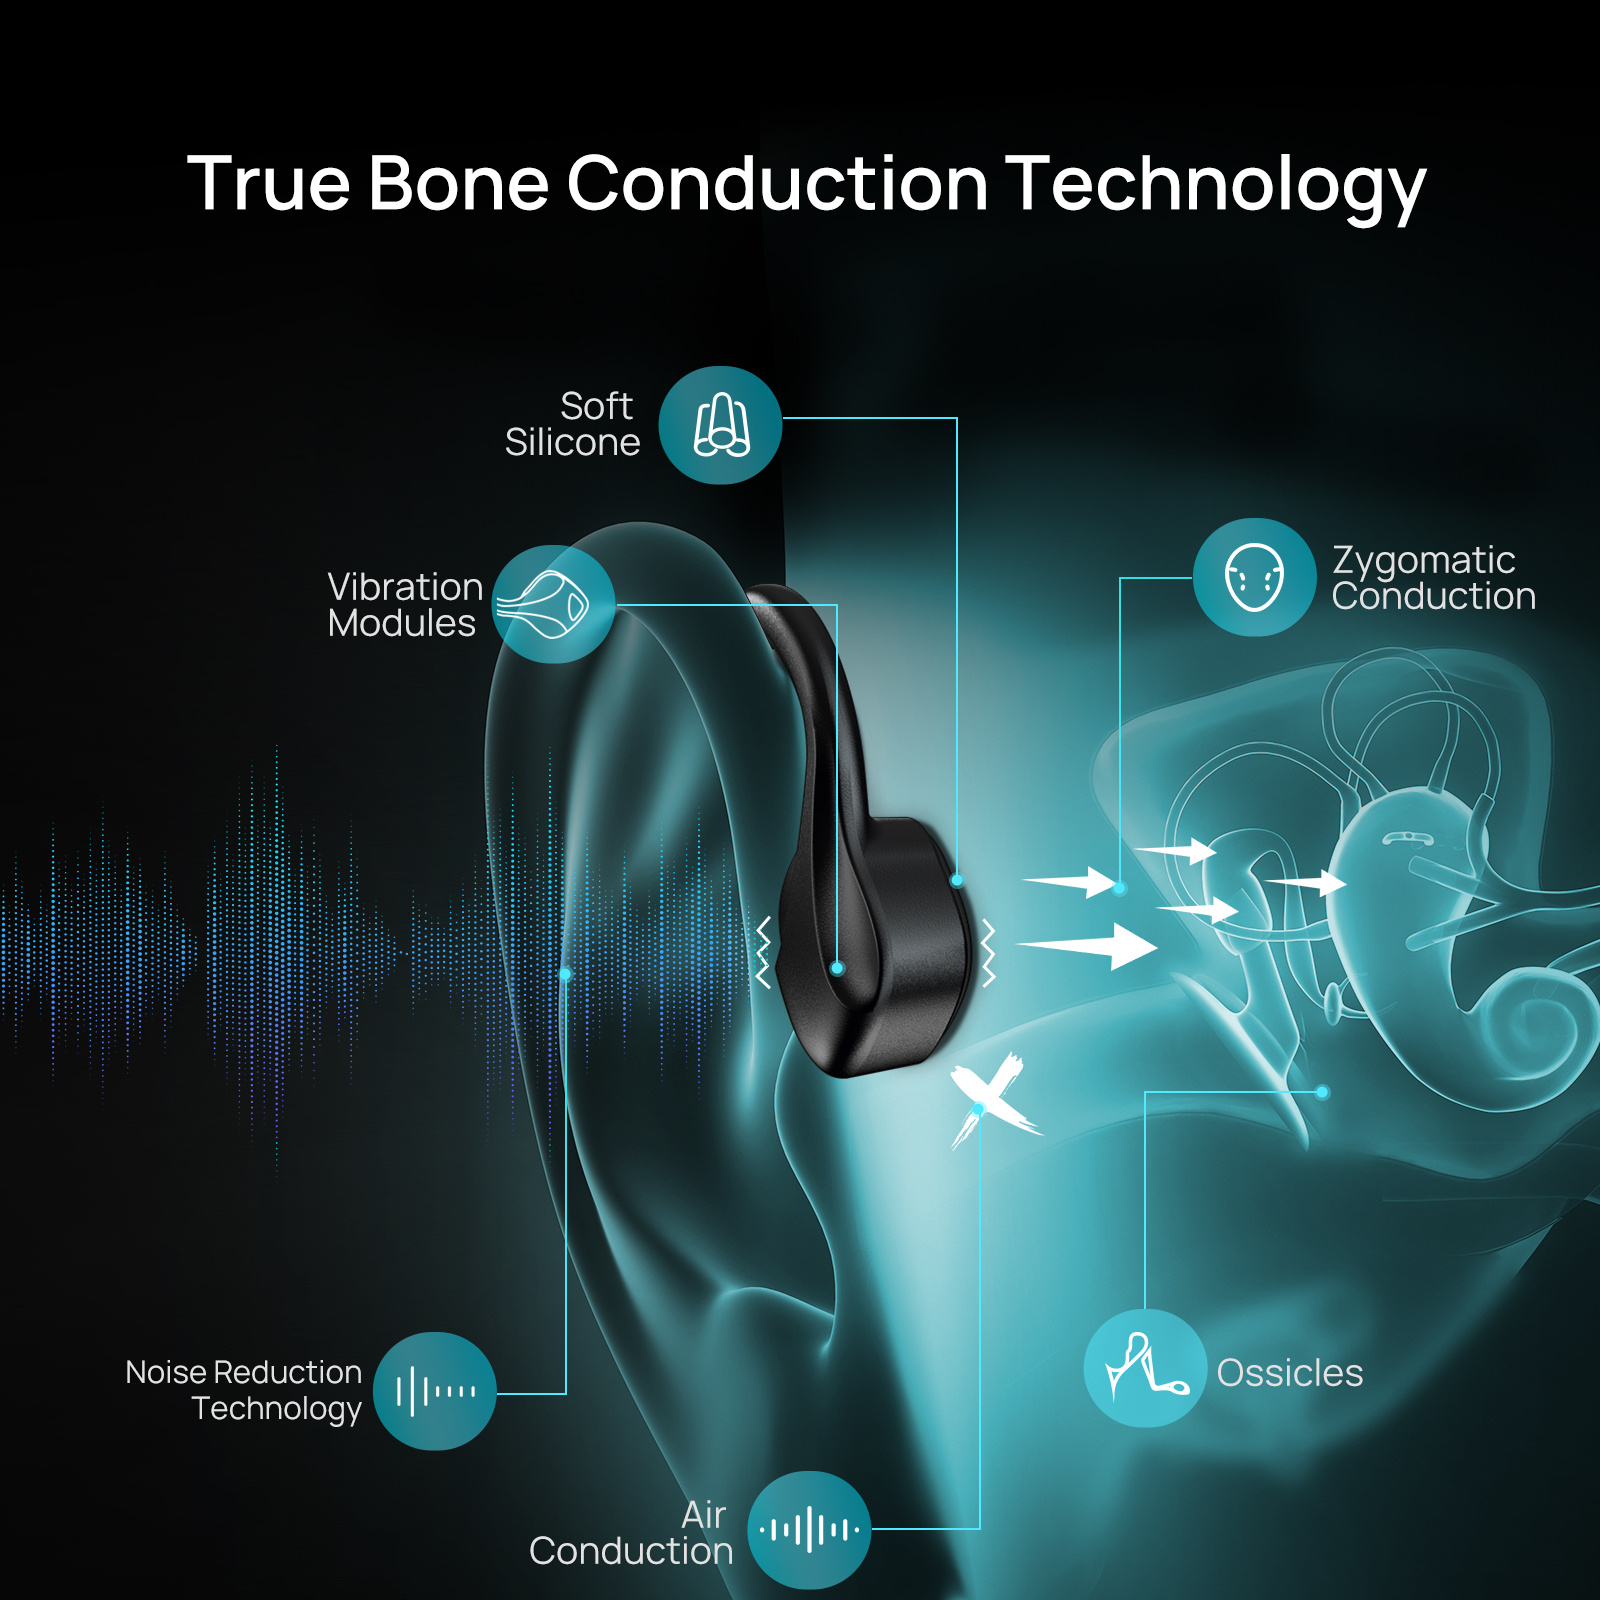 Bone Conduction Headphones with Noise Reduction Tech, 9 Digital N1 Open Ear Headphones with MIC, Jawbone Headphones Bluetooth 5.0 Sport Headset Sweatproof for Running, Bicycling, Hiking, Yoga -Black